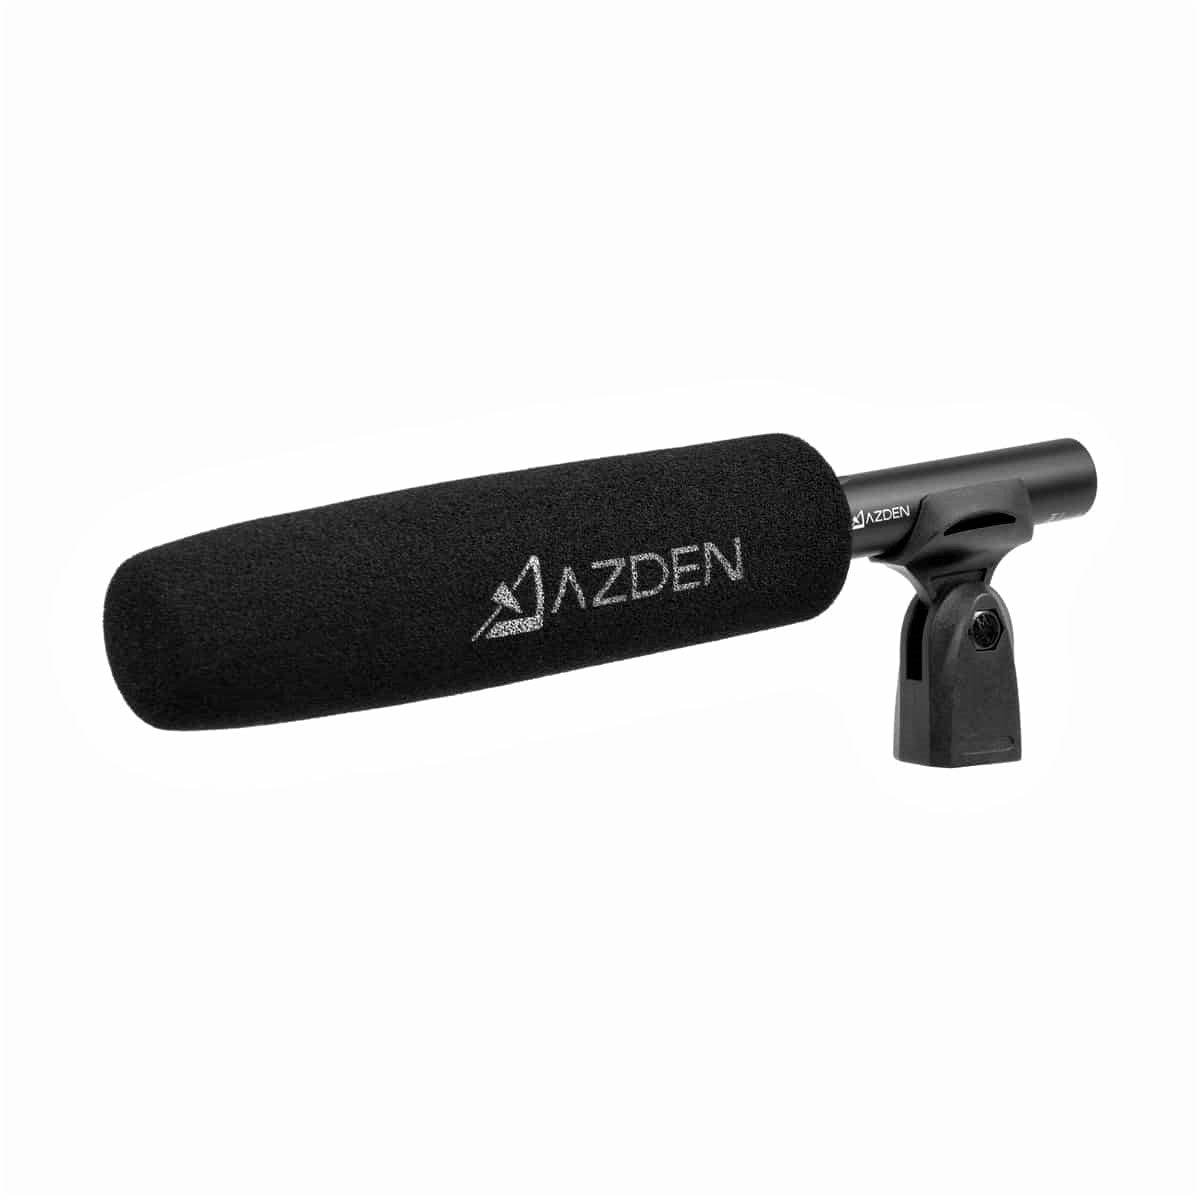 Azden Professional Hypercardioid Shotgun Microphone